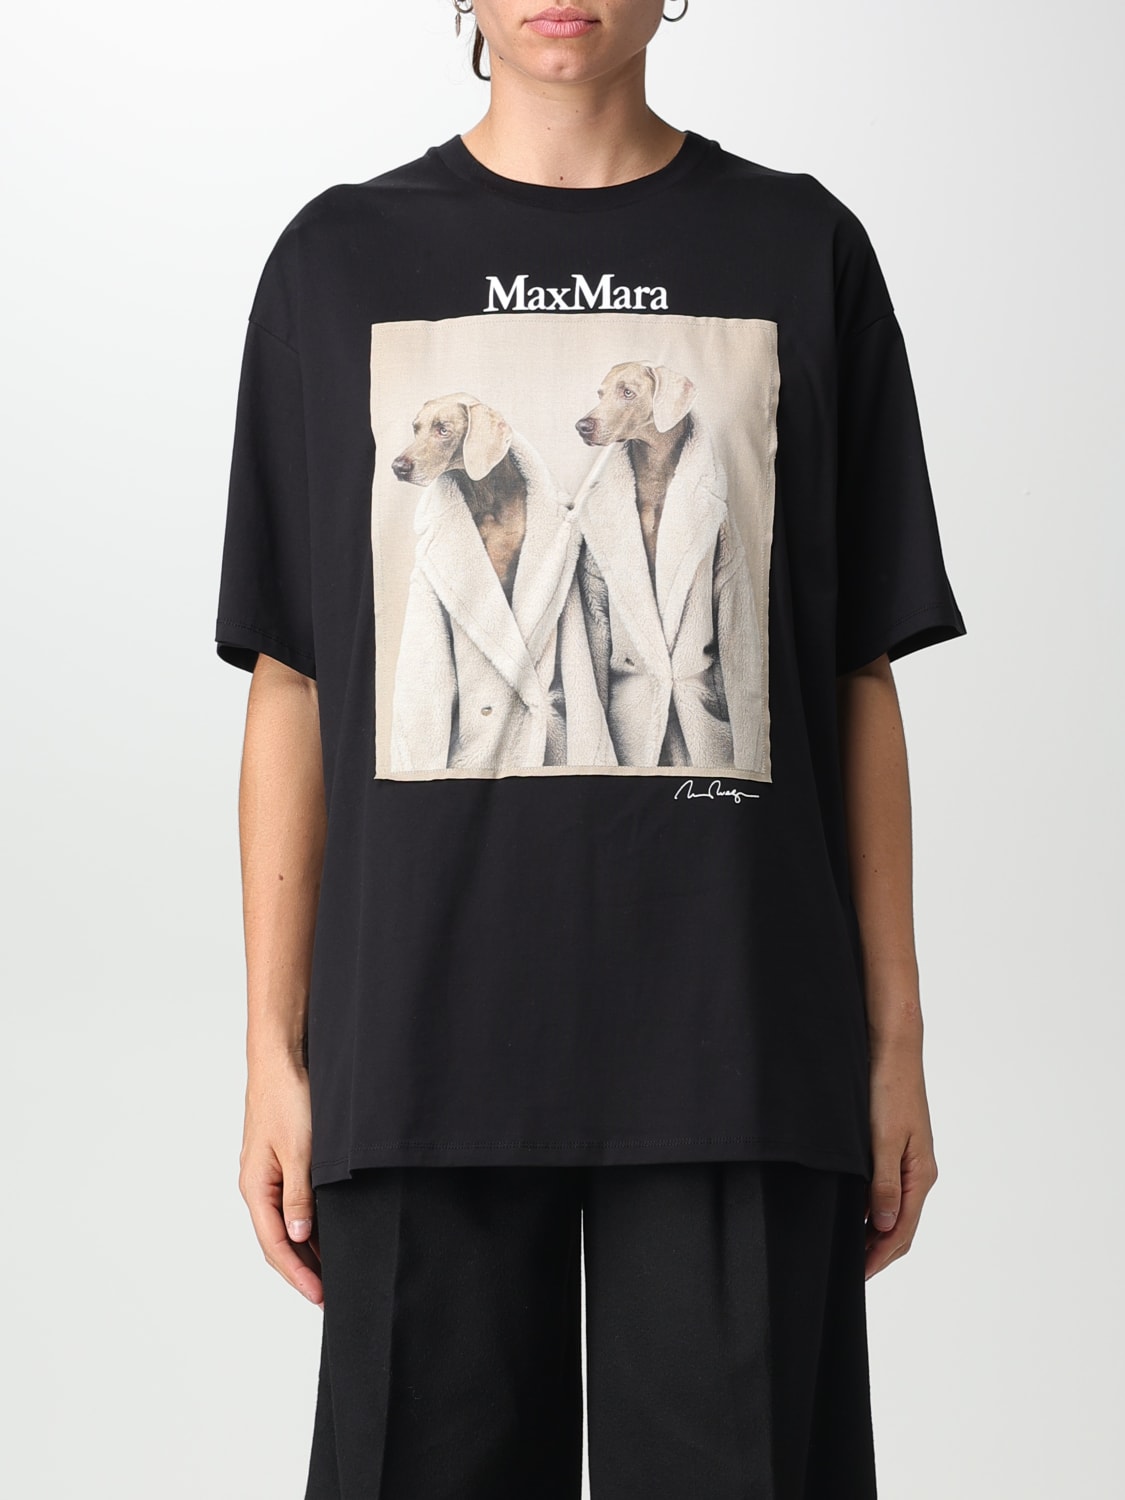 MAX MARA: cotton t-shirt - Black | Max Mara t-shirt 2319460139600 ...